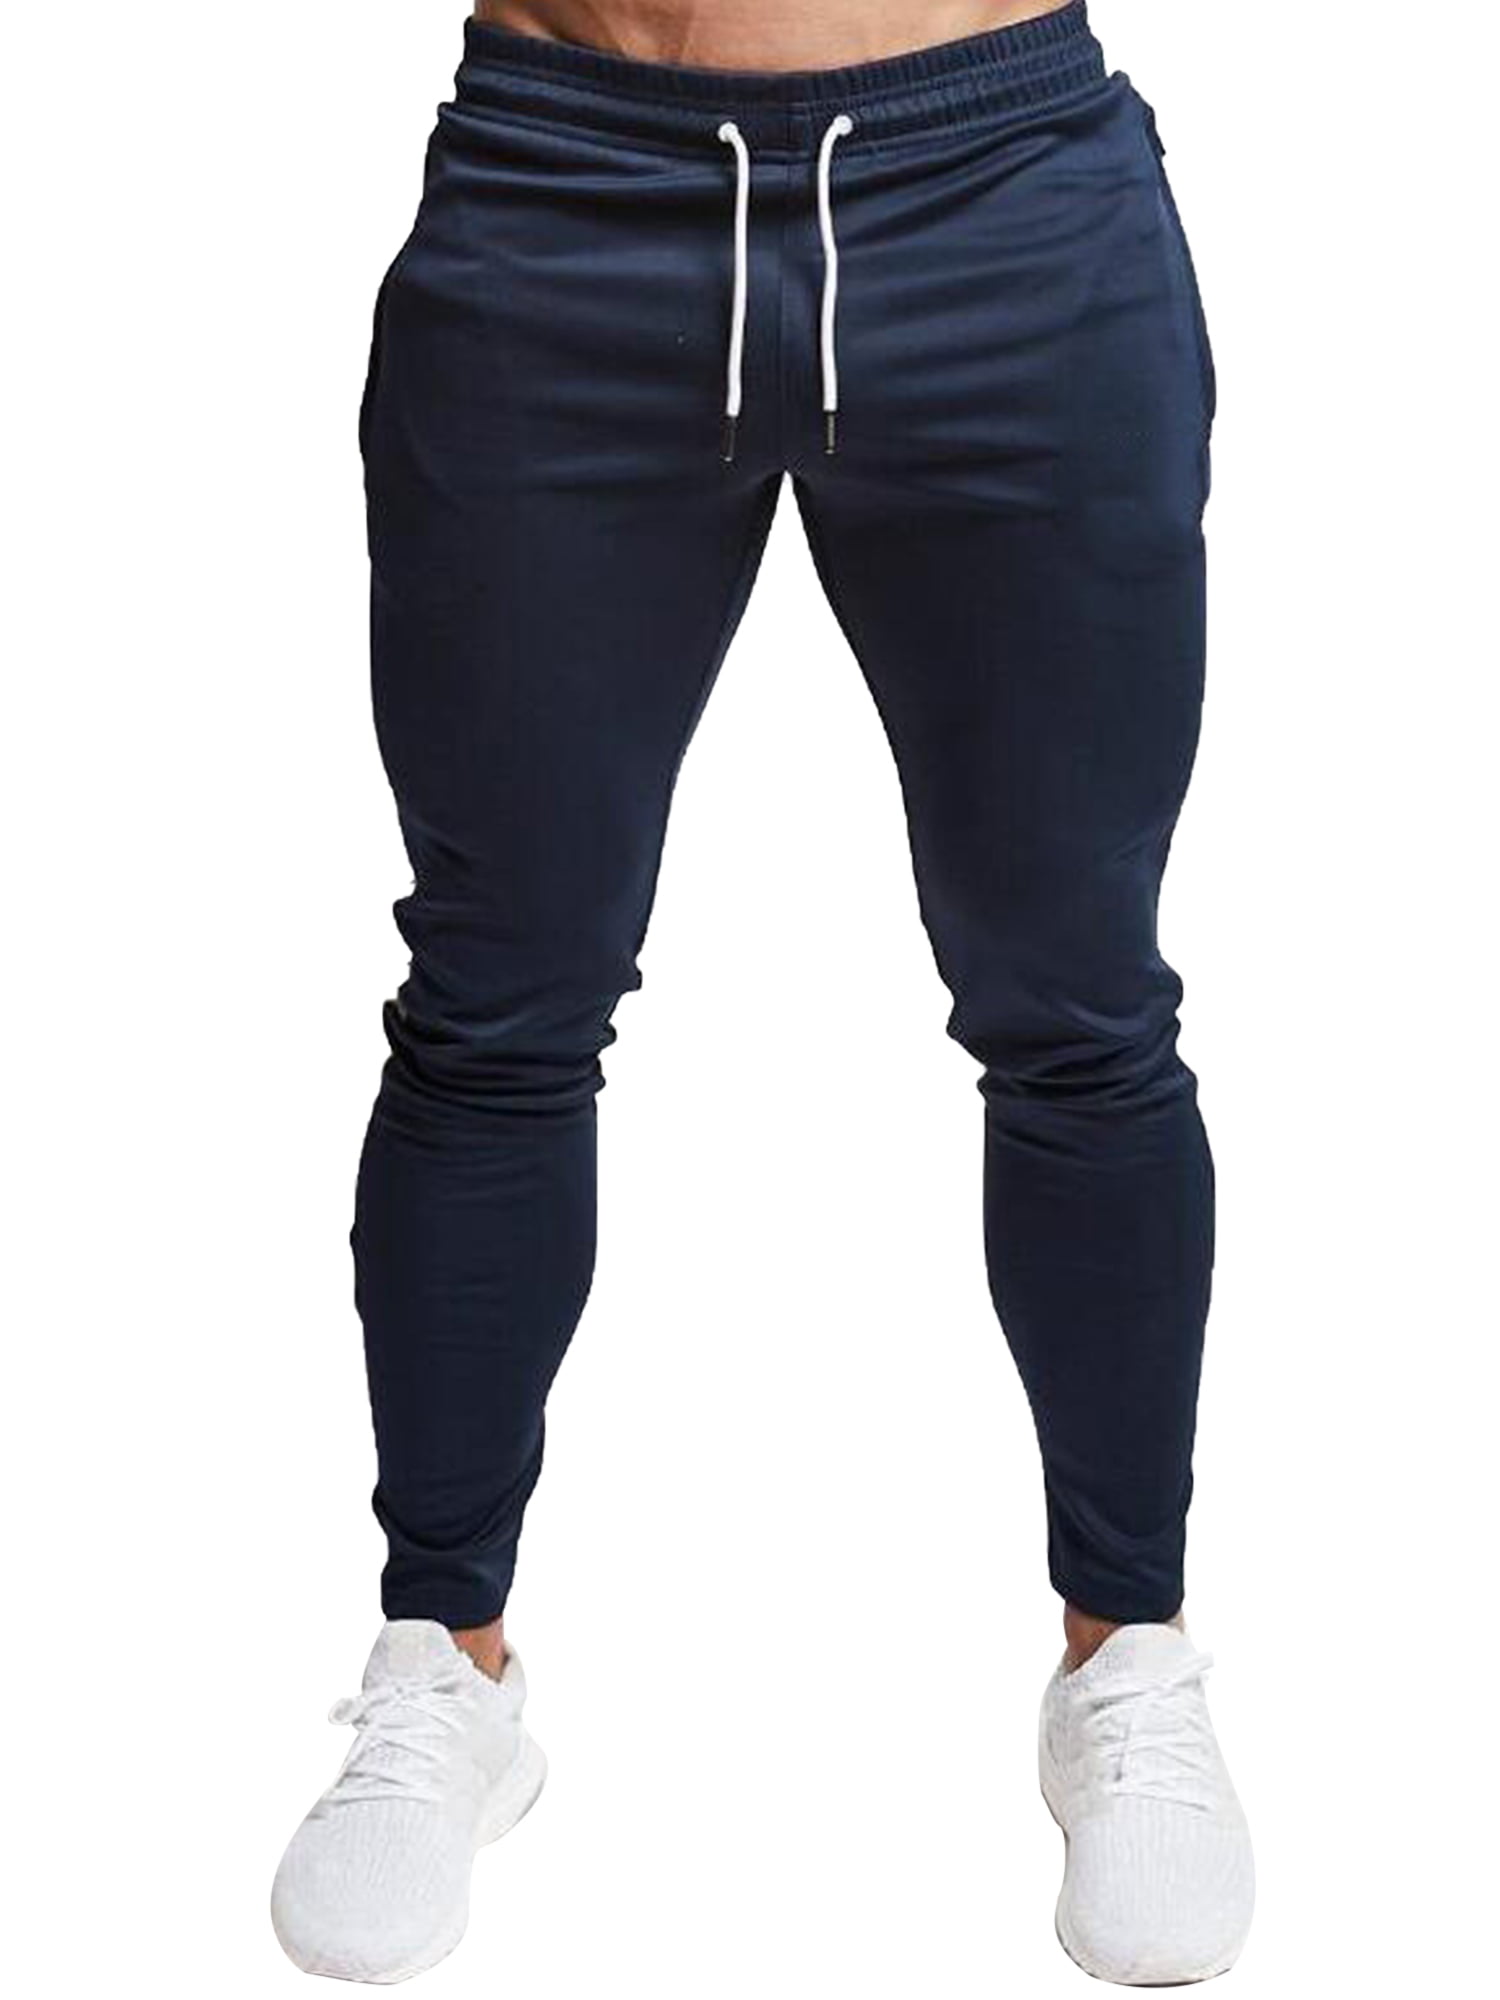 Men Long Trousers  Fit Gym Slim Sports Joggers Casual Running Pants Sweatpants 